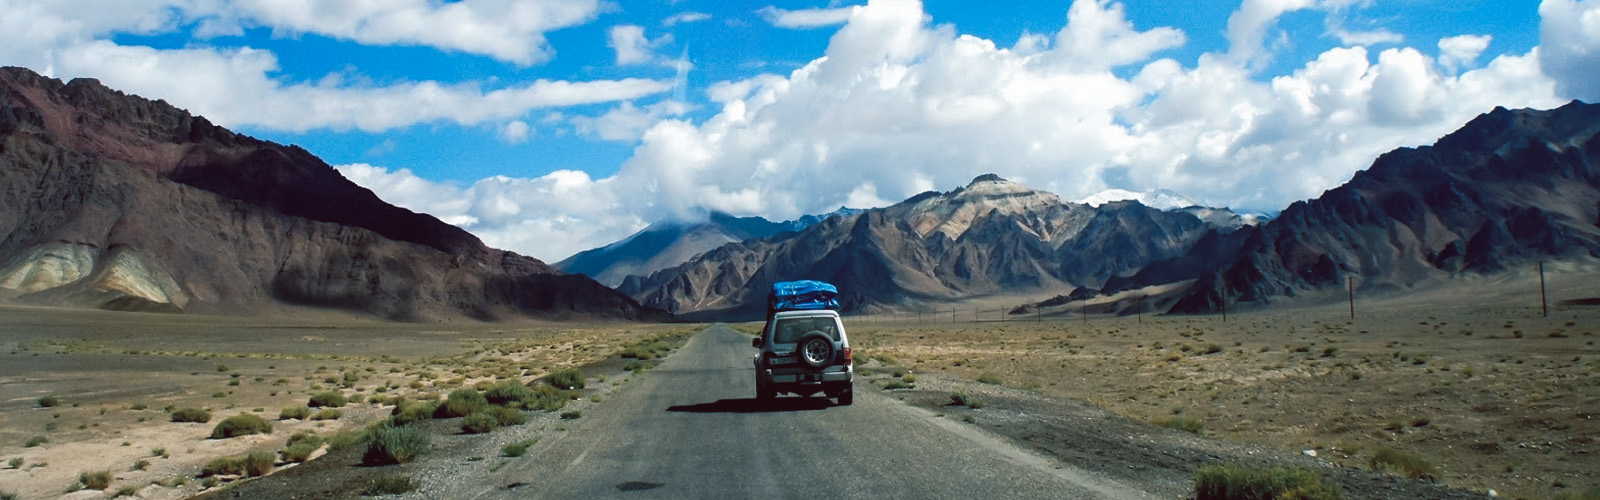 Pamir Highway Travel